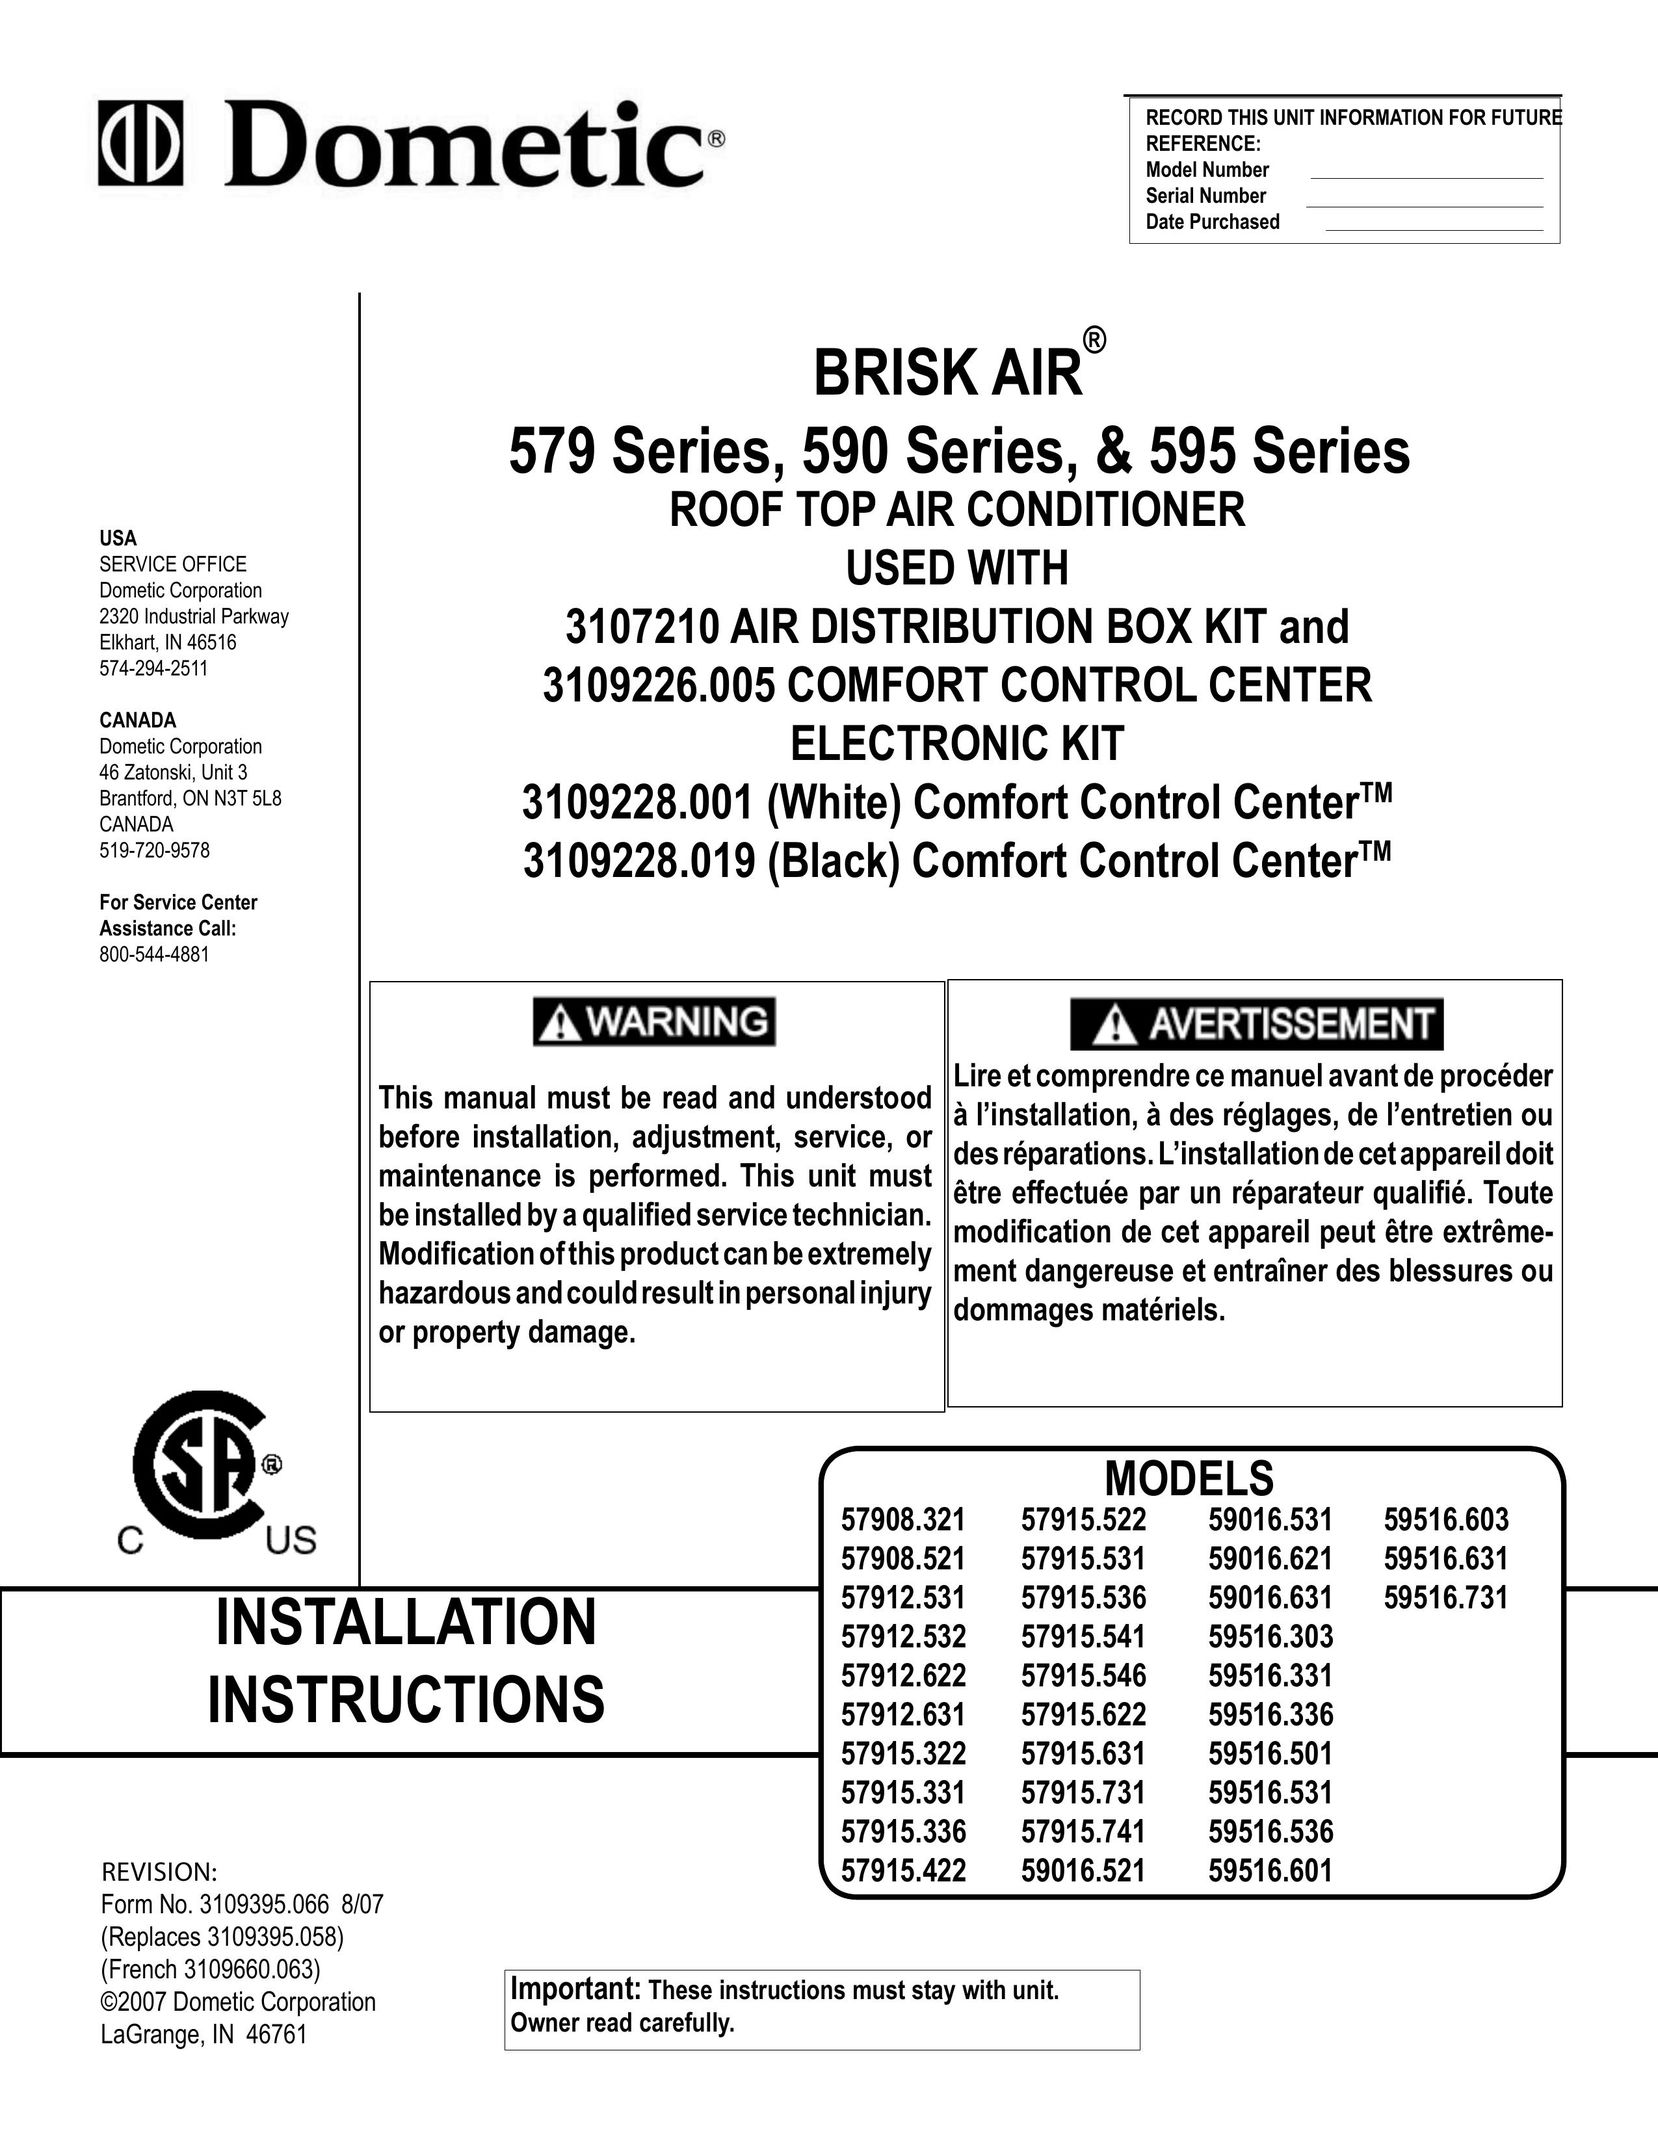 Dometic 590 SERIES Air Conditioner User Manual